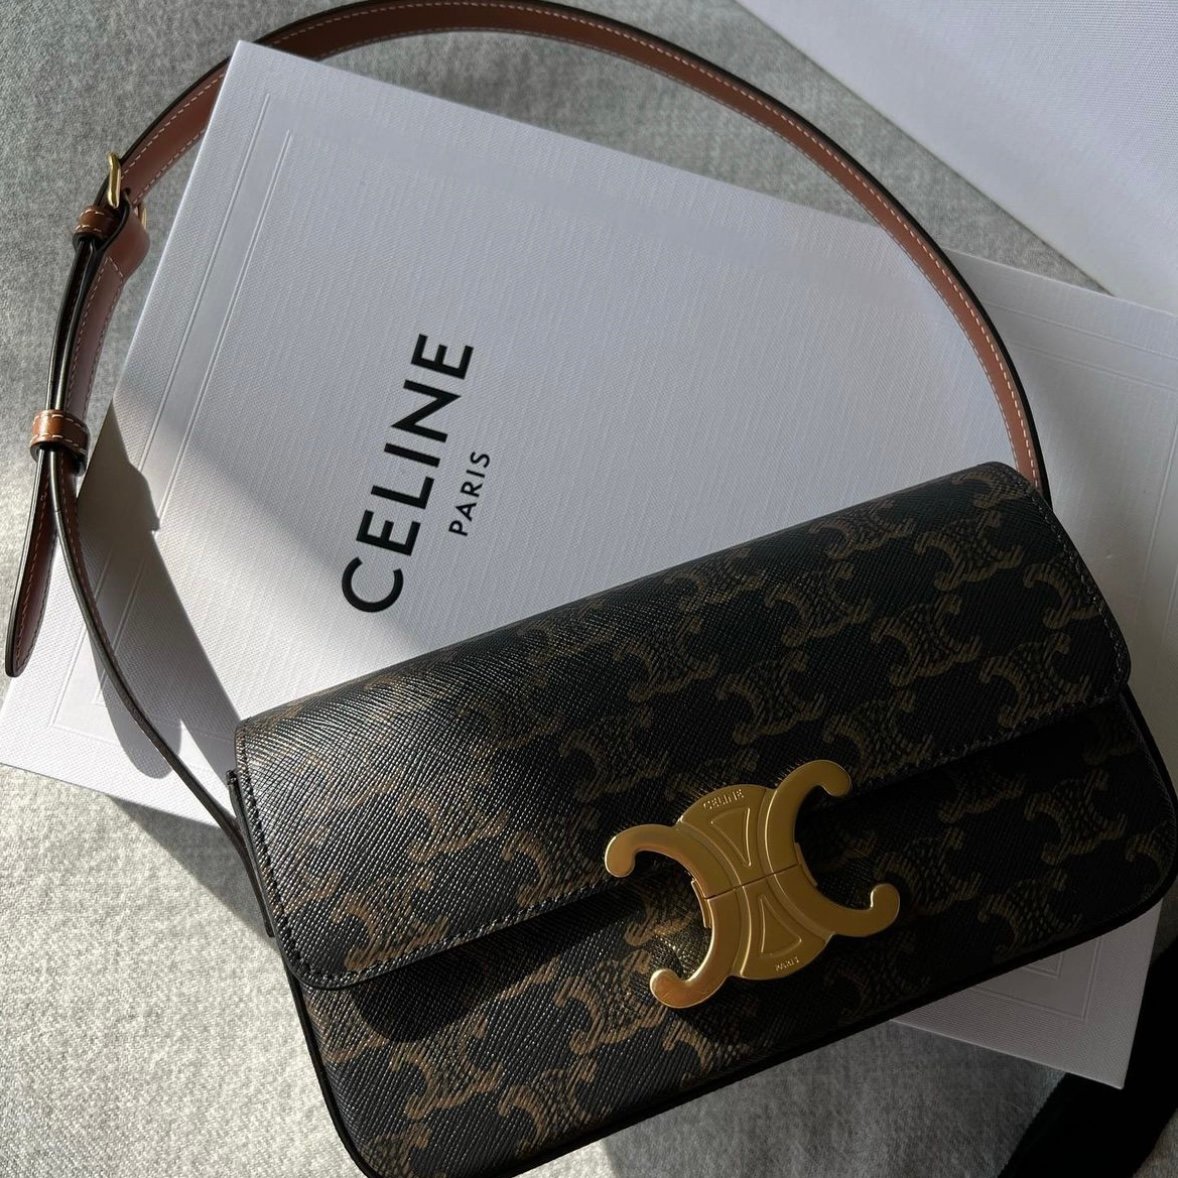 Celine, Bags